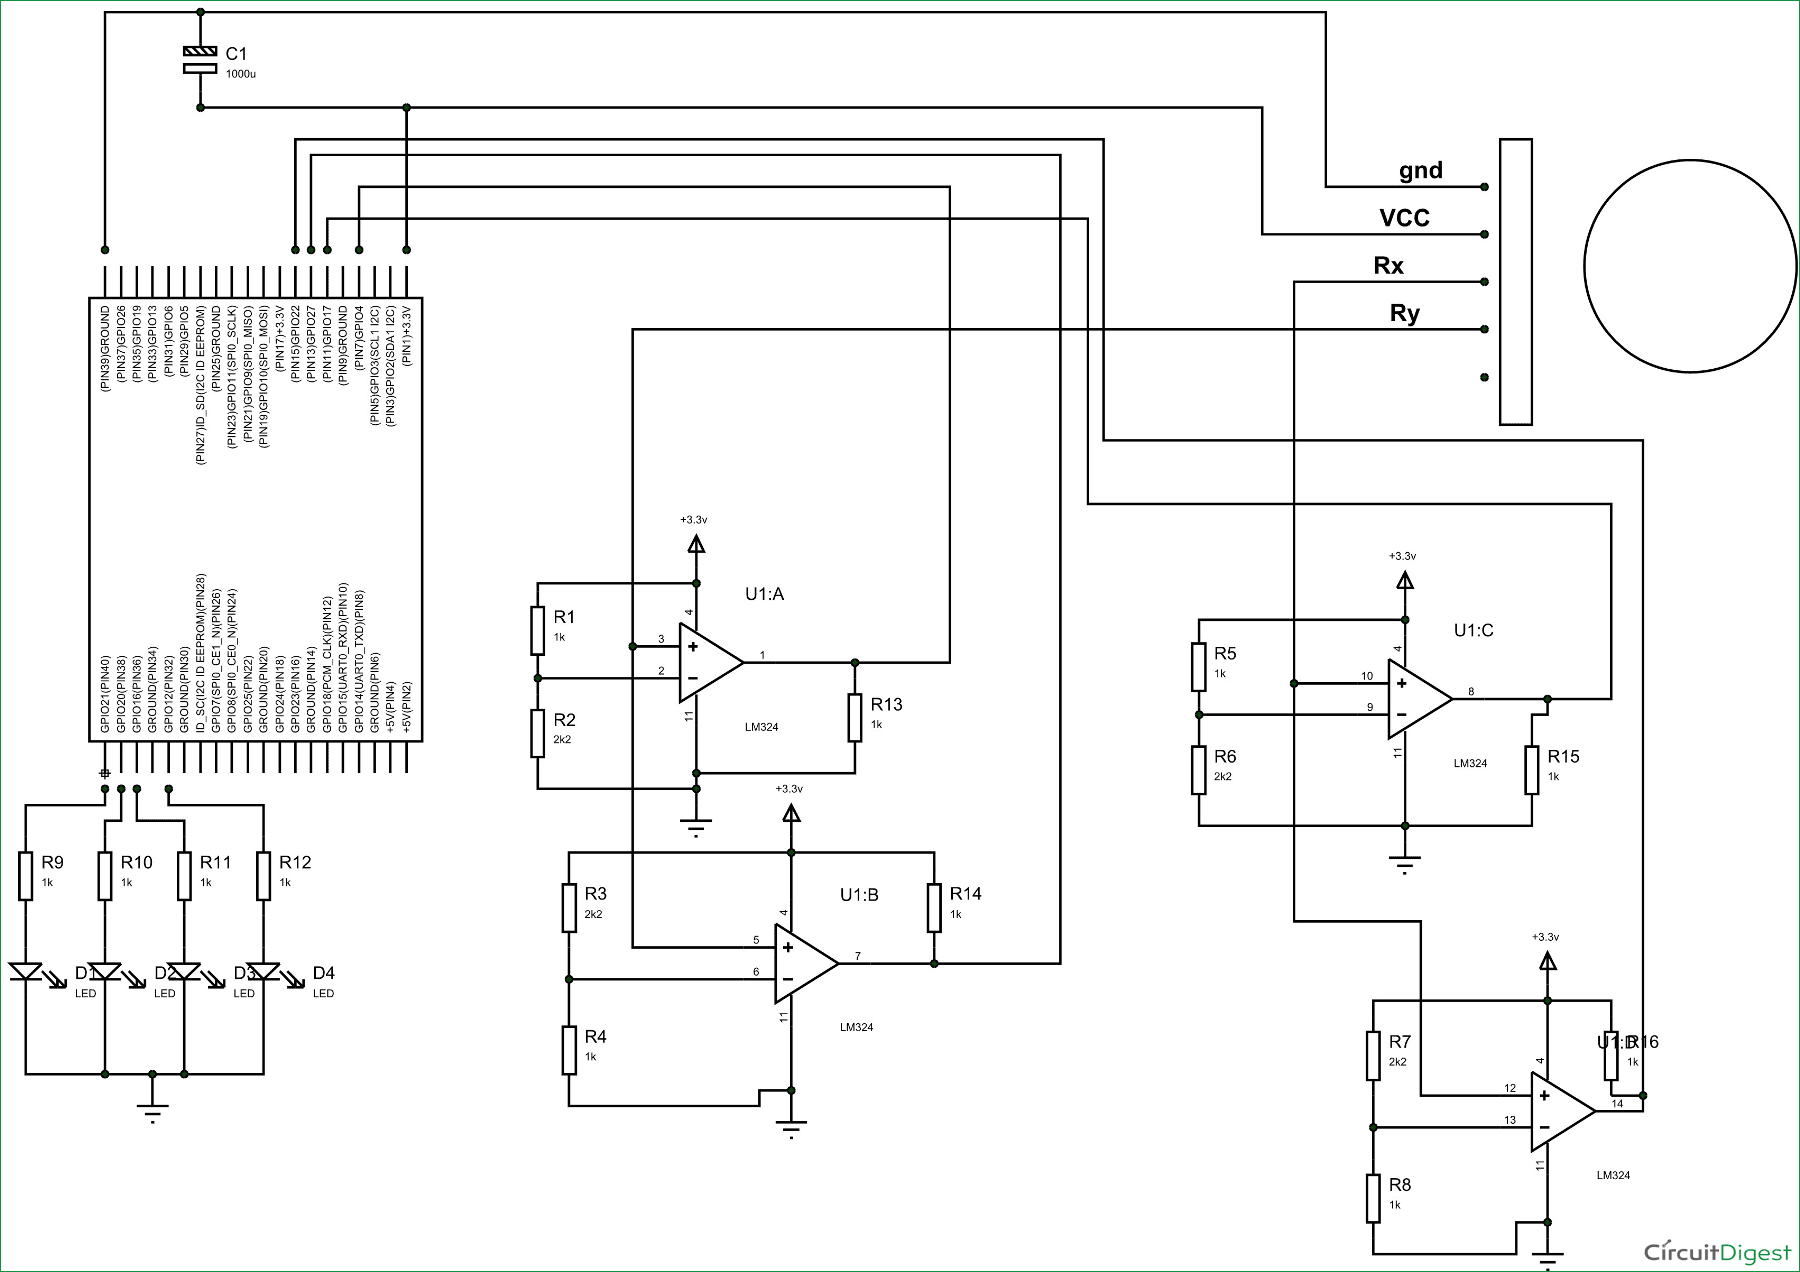 interfacing-joystick-with-raspberry-pi-circuit-diagram